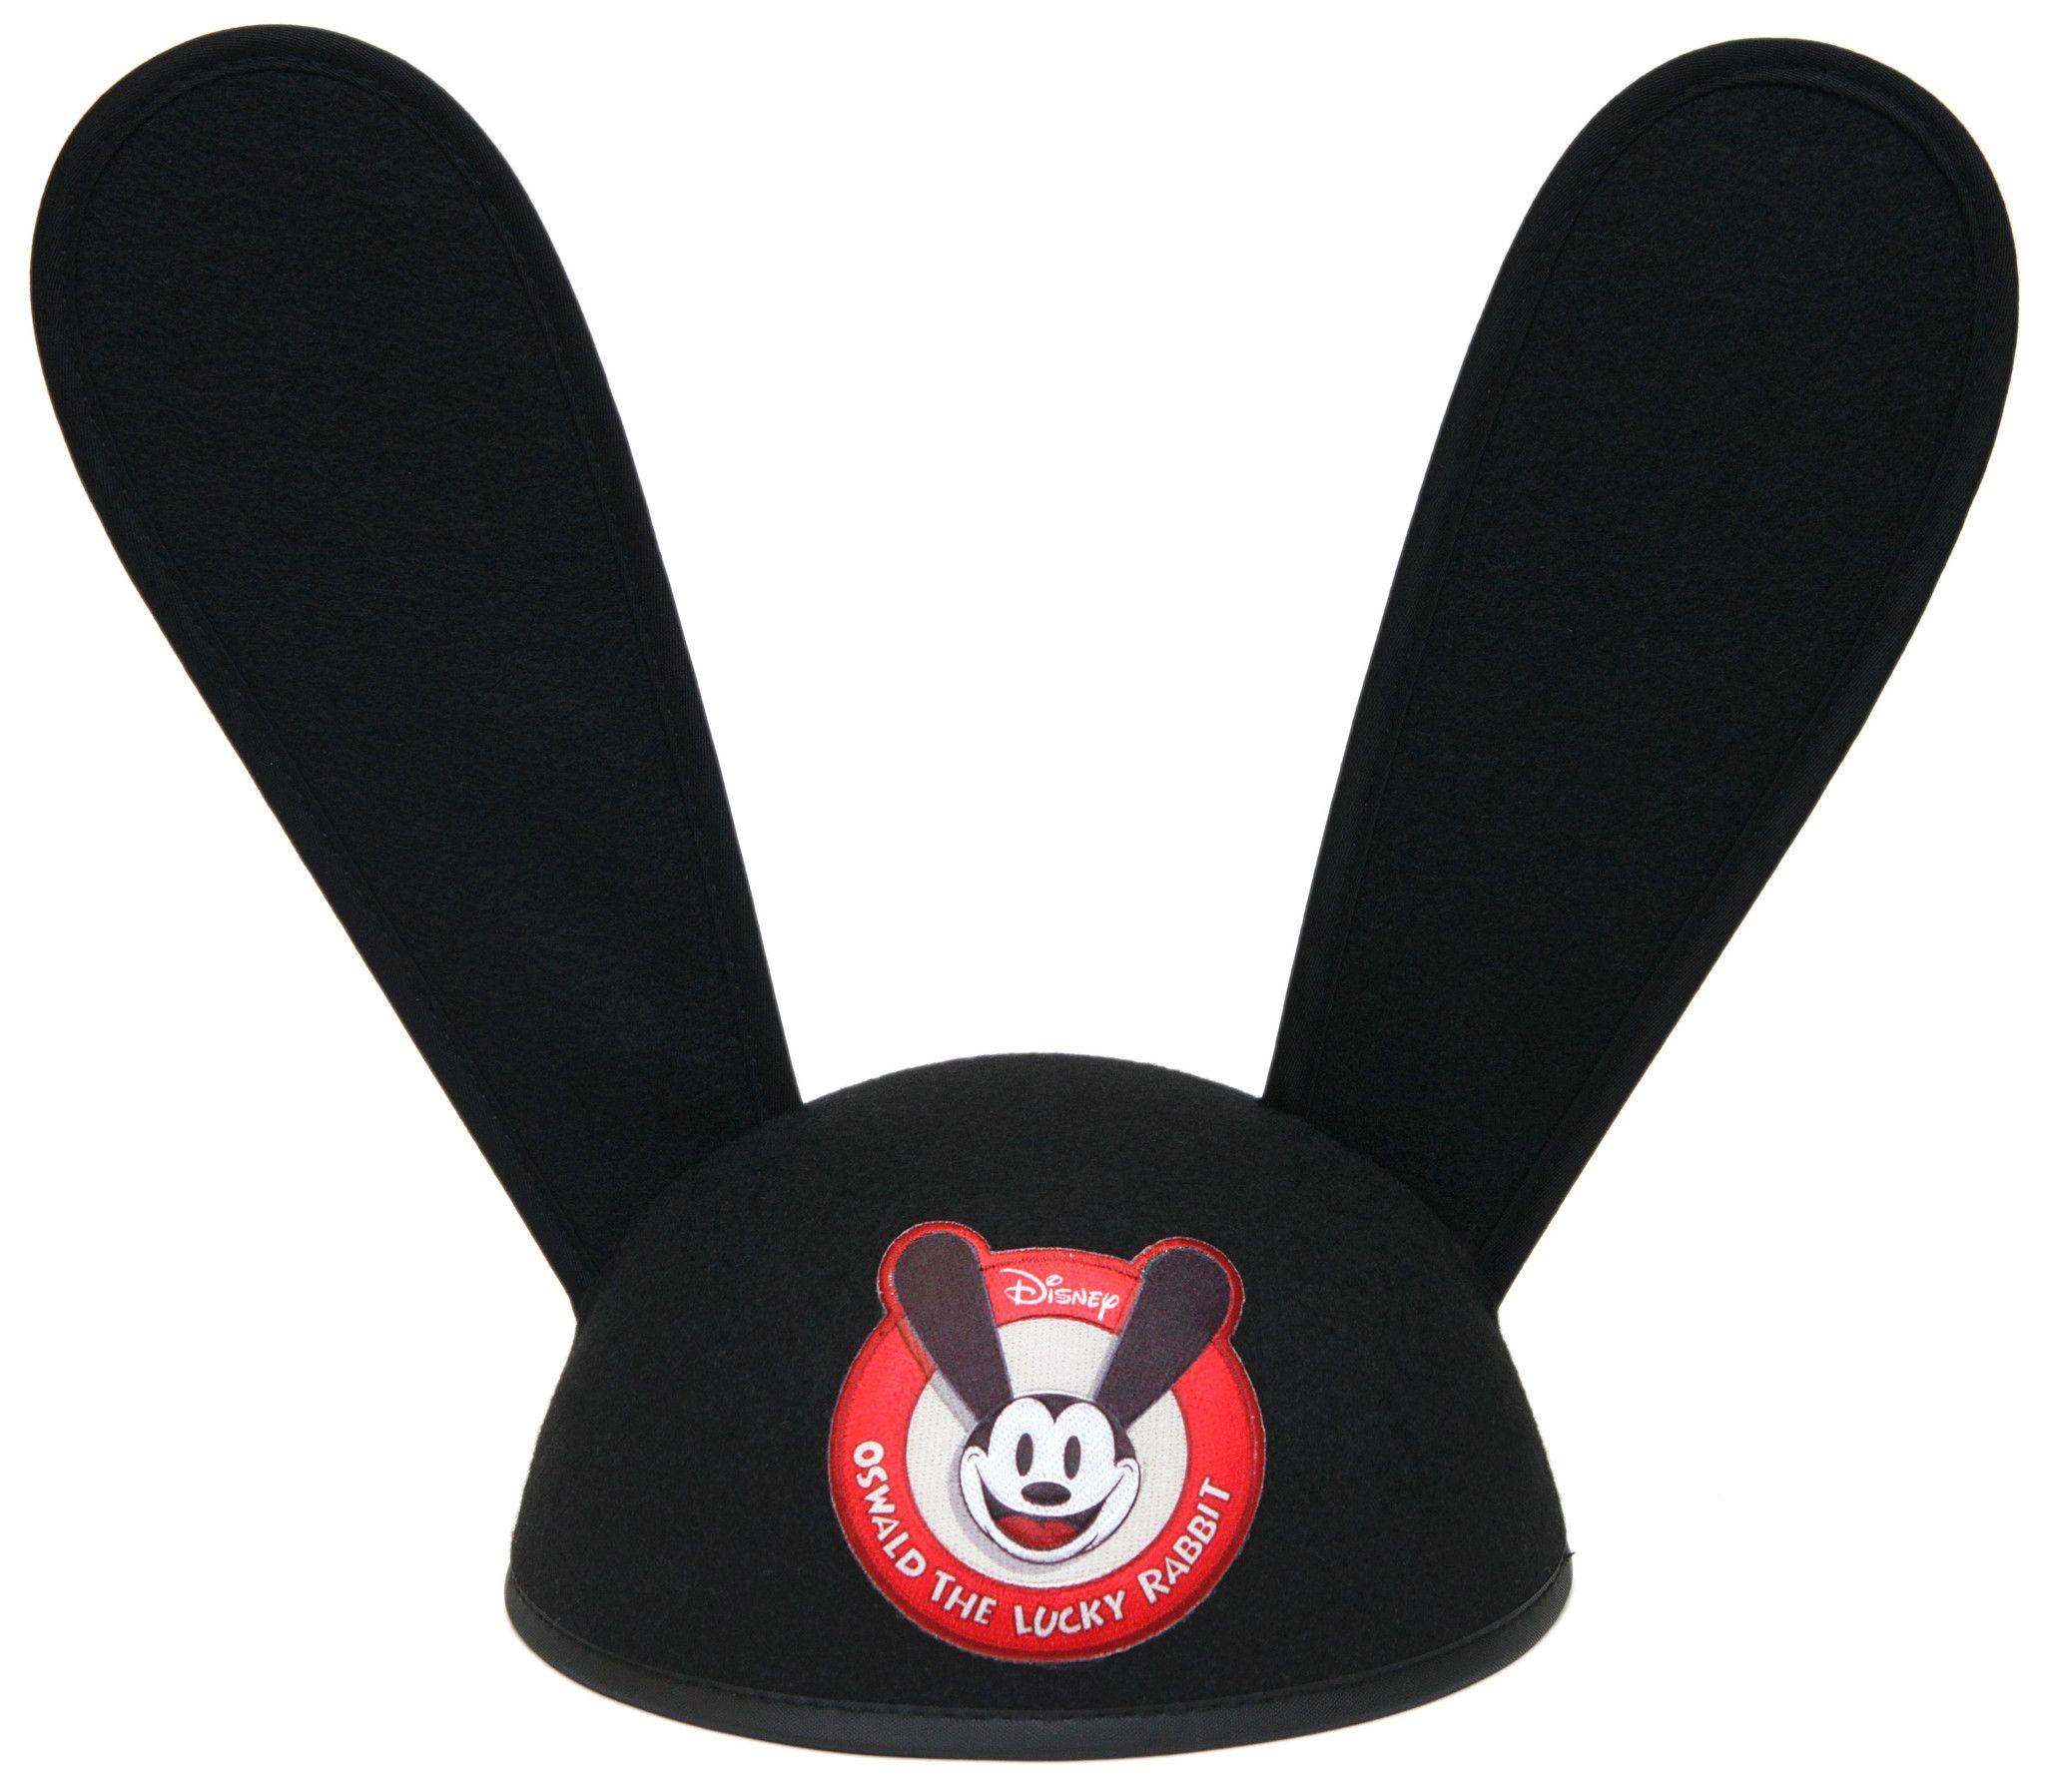 Oswald the Lucky Rabbit Logo - Disney World: Oswald the Lucky Rabbit Hats at Disney World ...